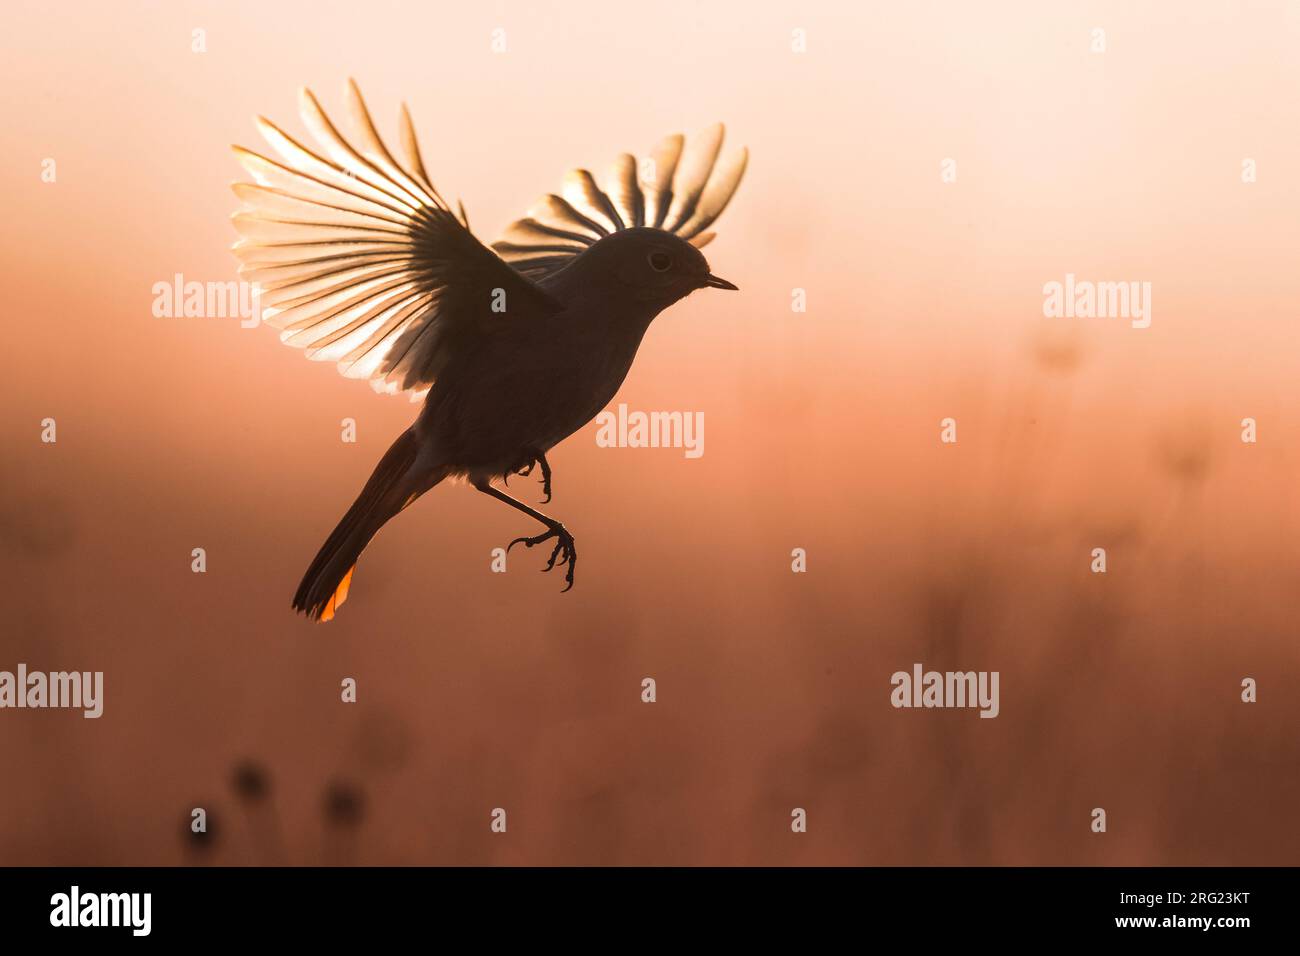 Wintering Black Redstart (Phoenicurus ochruros gibraltariensis) in Italy. Stock Photo